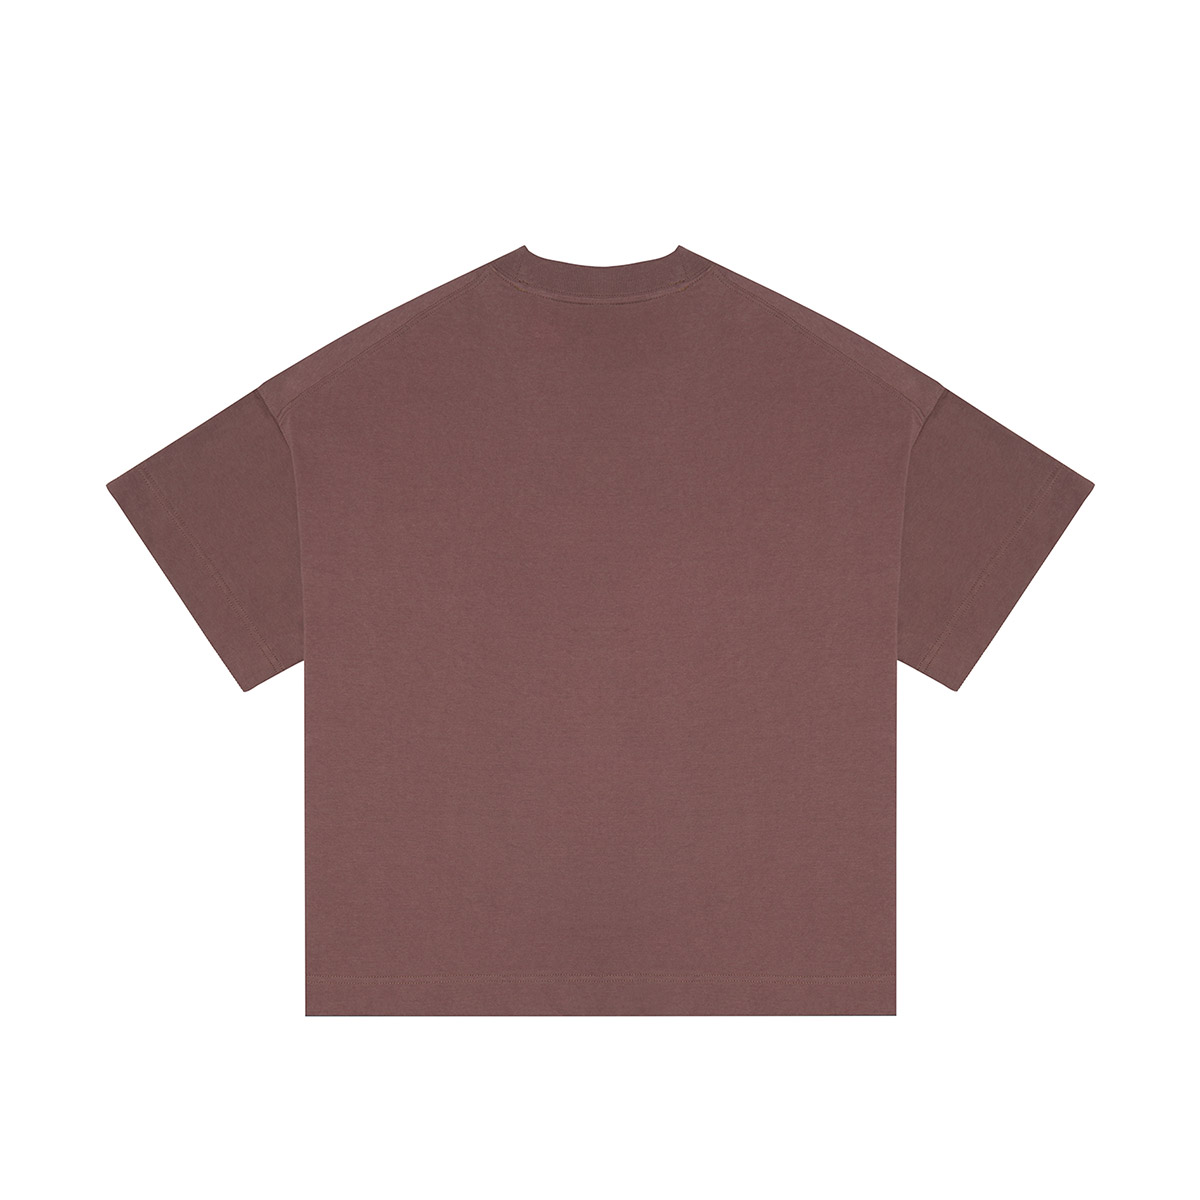 oalc SYMBOL OVER-FIT T-SHIRT 심볼 오버핏 티셔츠 (BROWN)